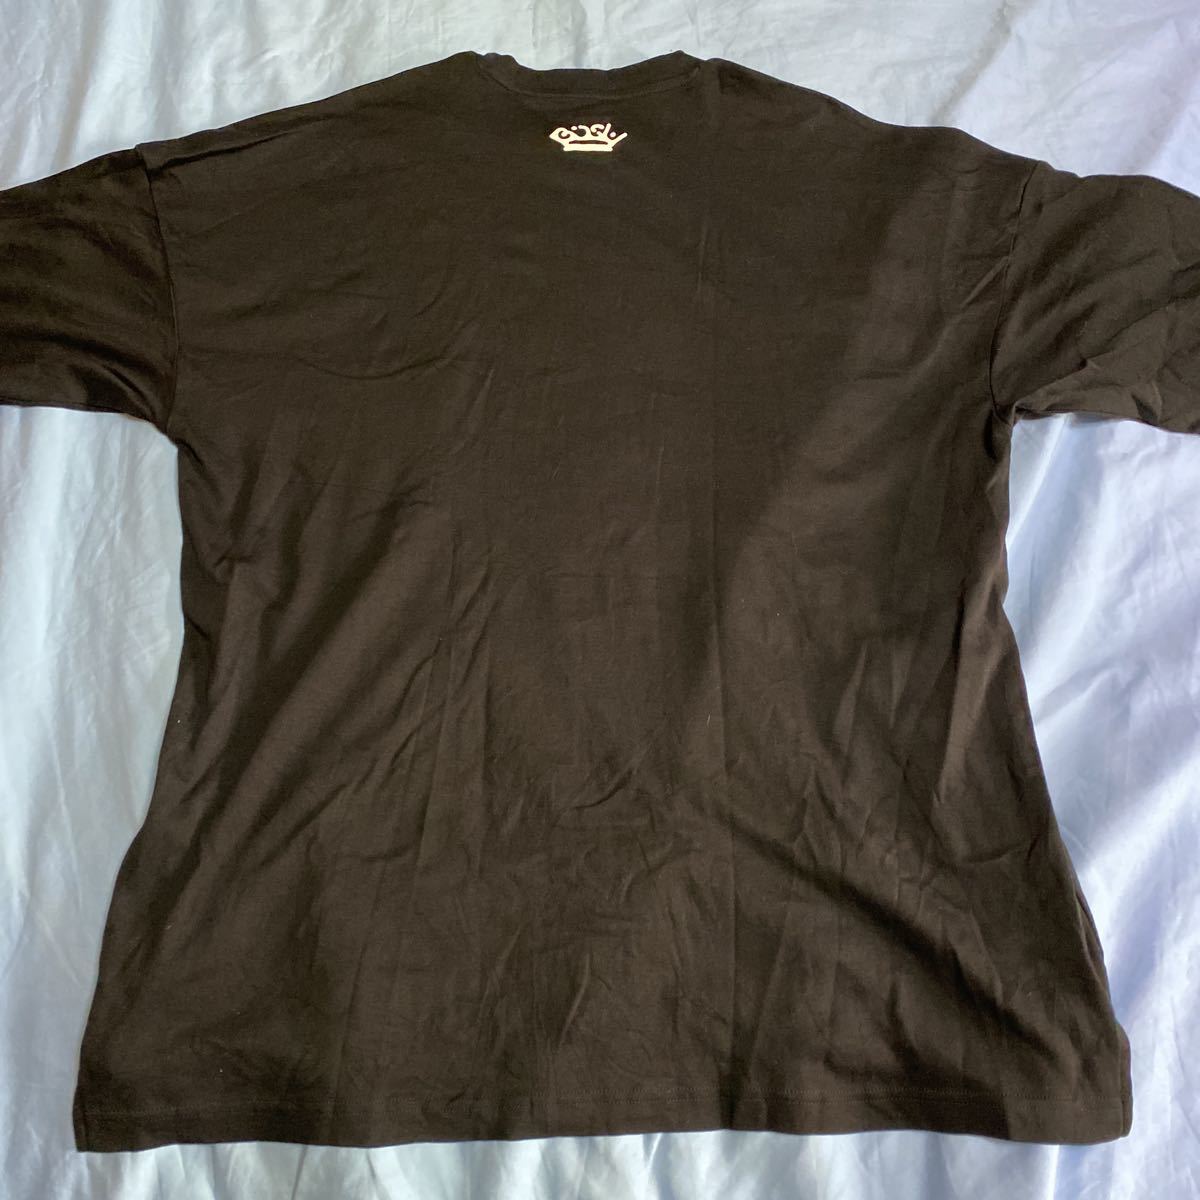  ultimate beautiful goods BiSH T-shirt XL size bishu postage nationwide equal 210 jpy 